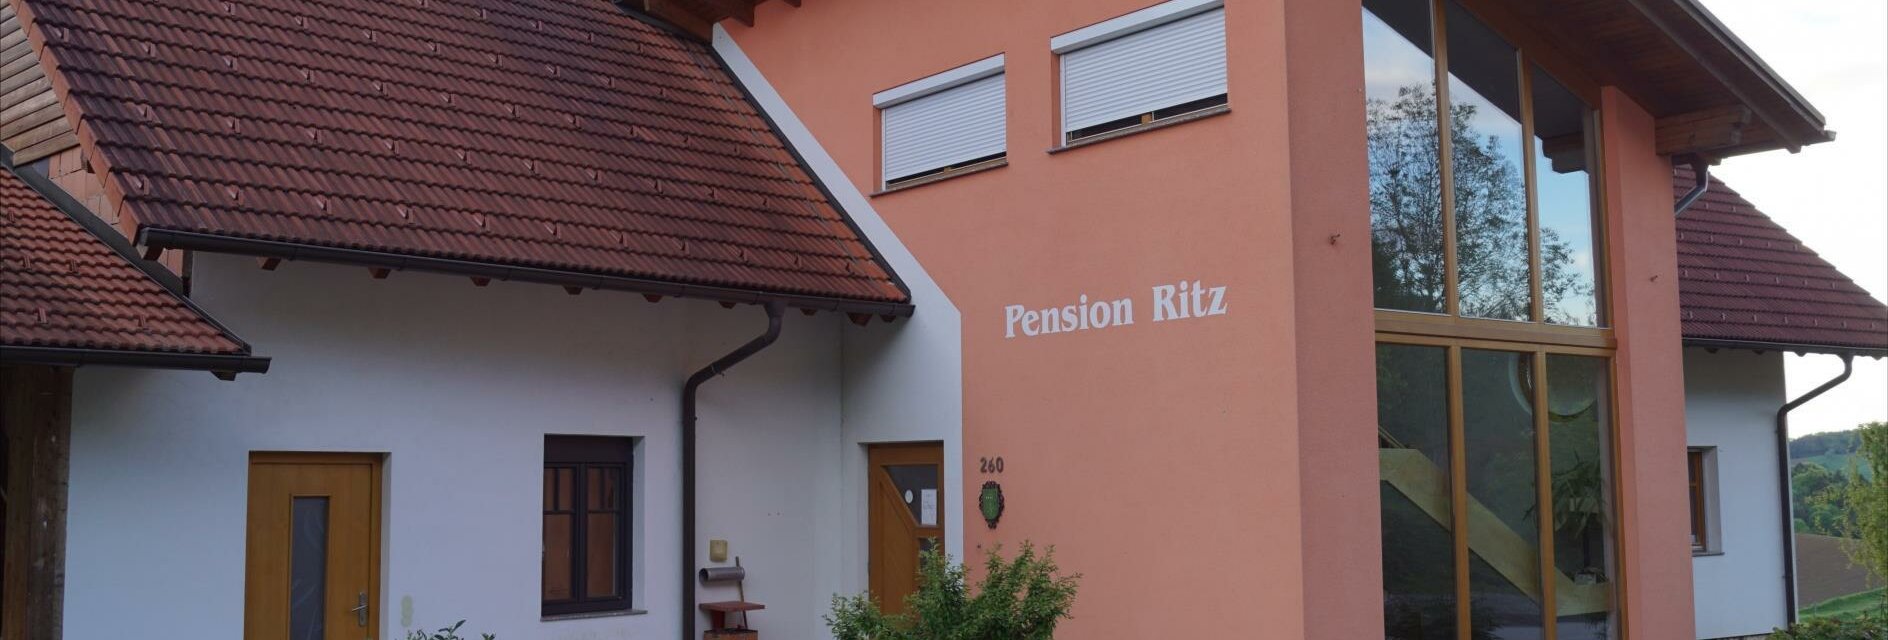 Pension Ritz